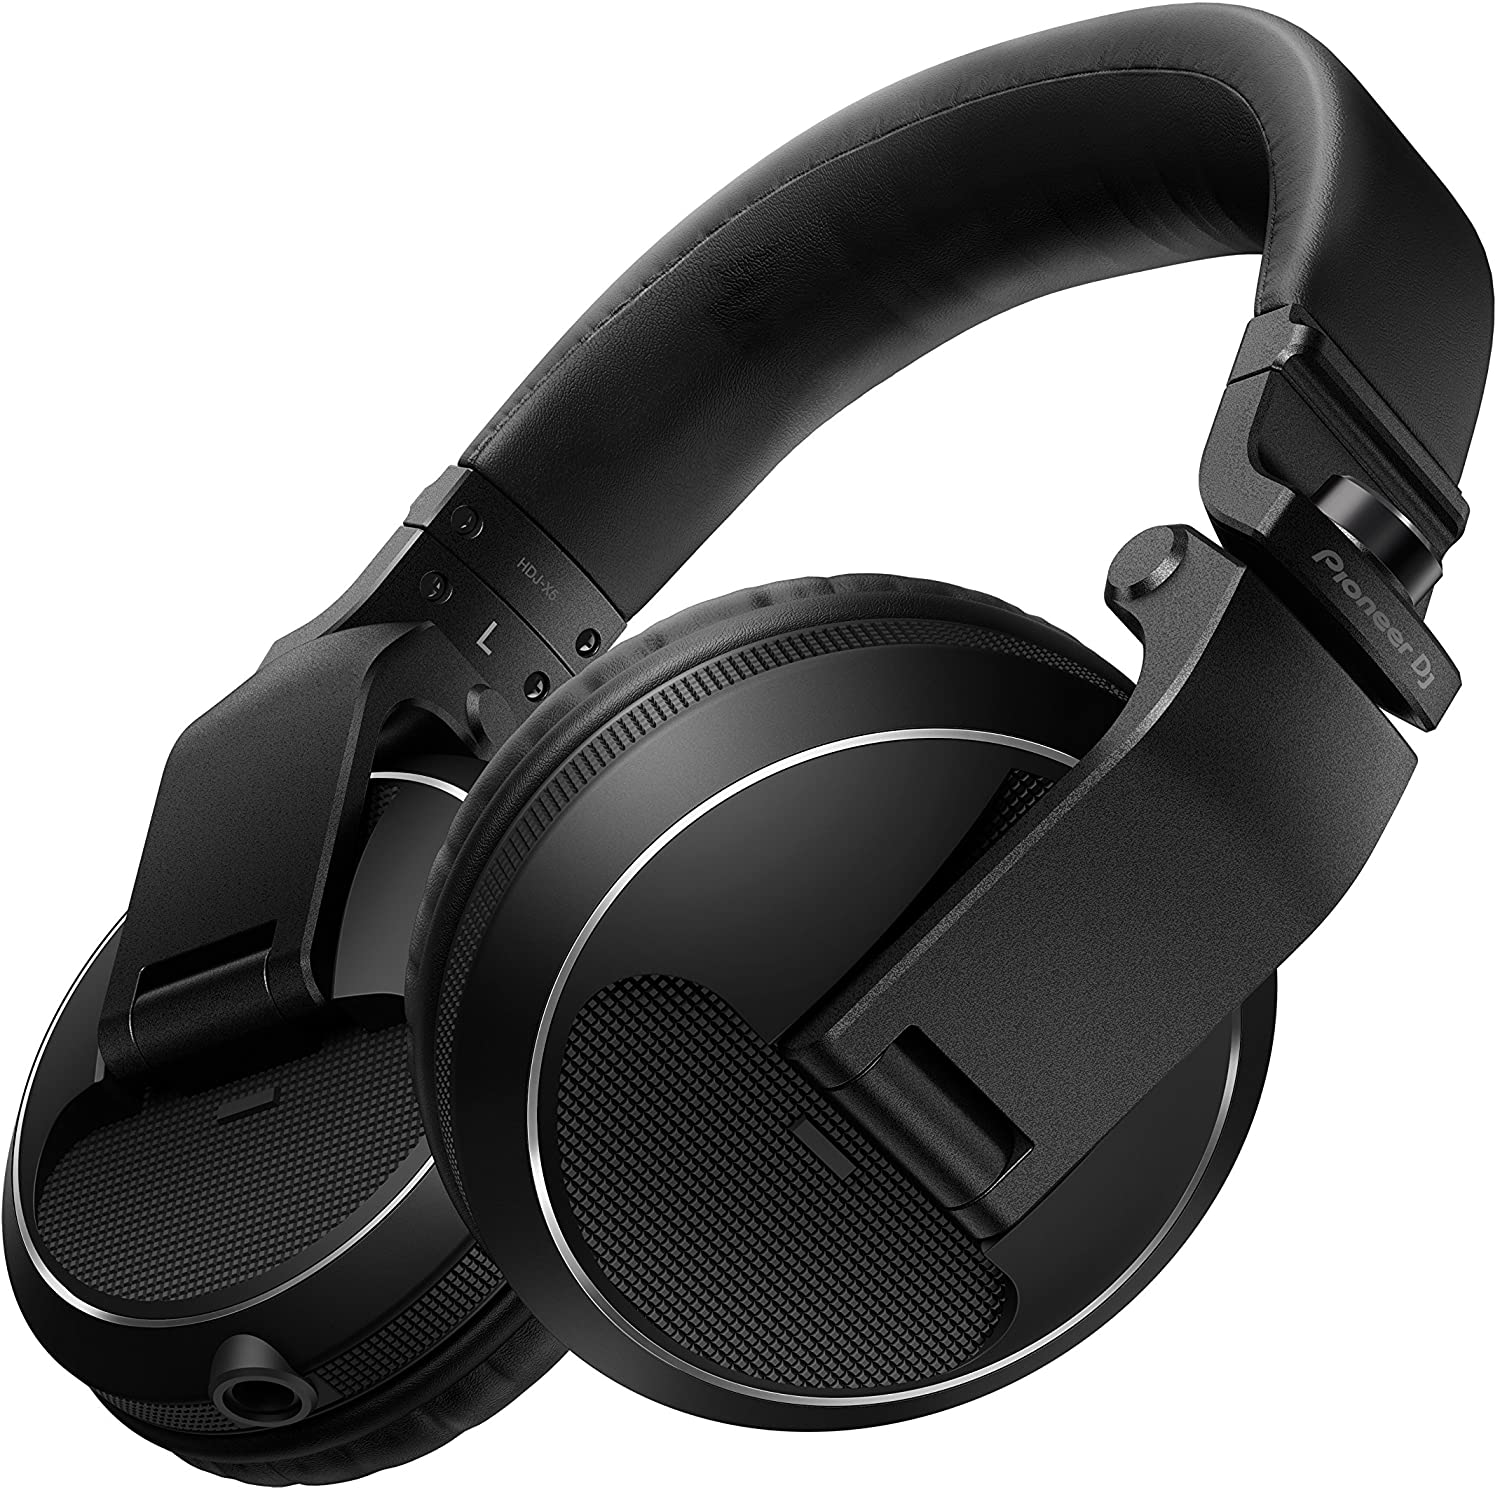 19. PIONEER HDJ-X5-K Professional DJ Headphones (Wired) at Amazon